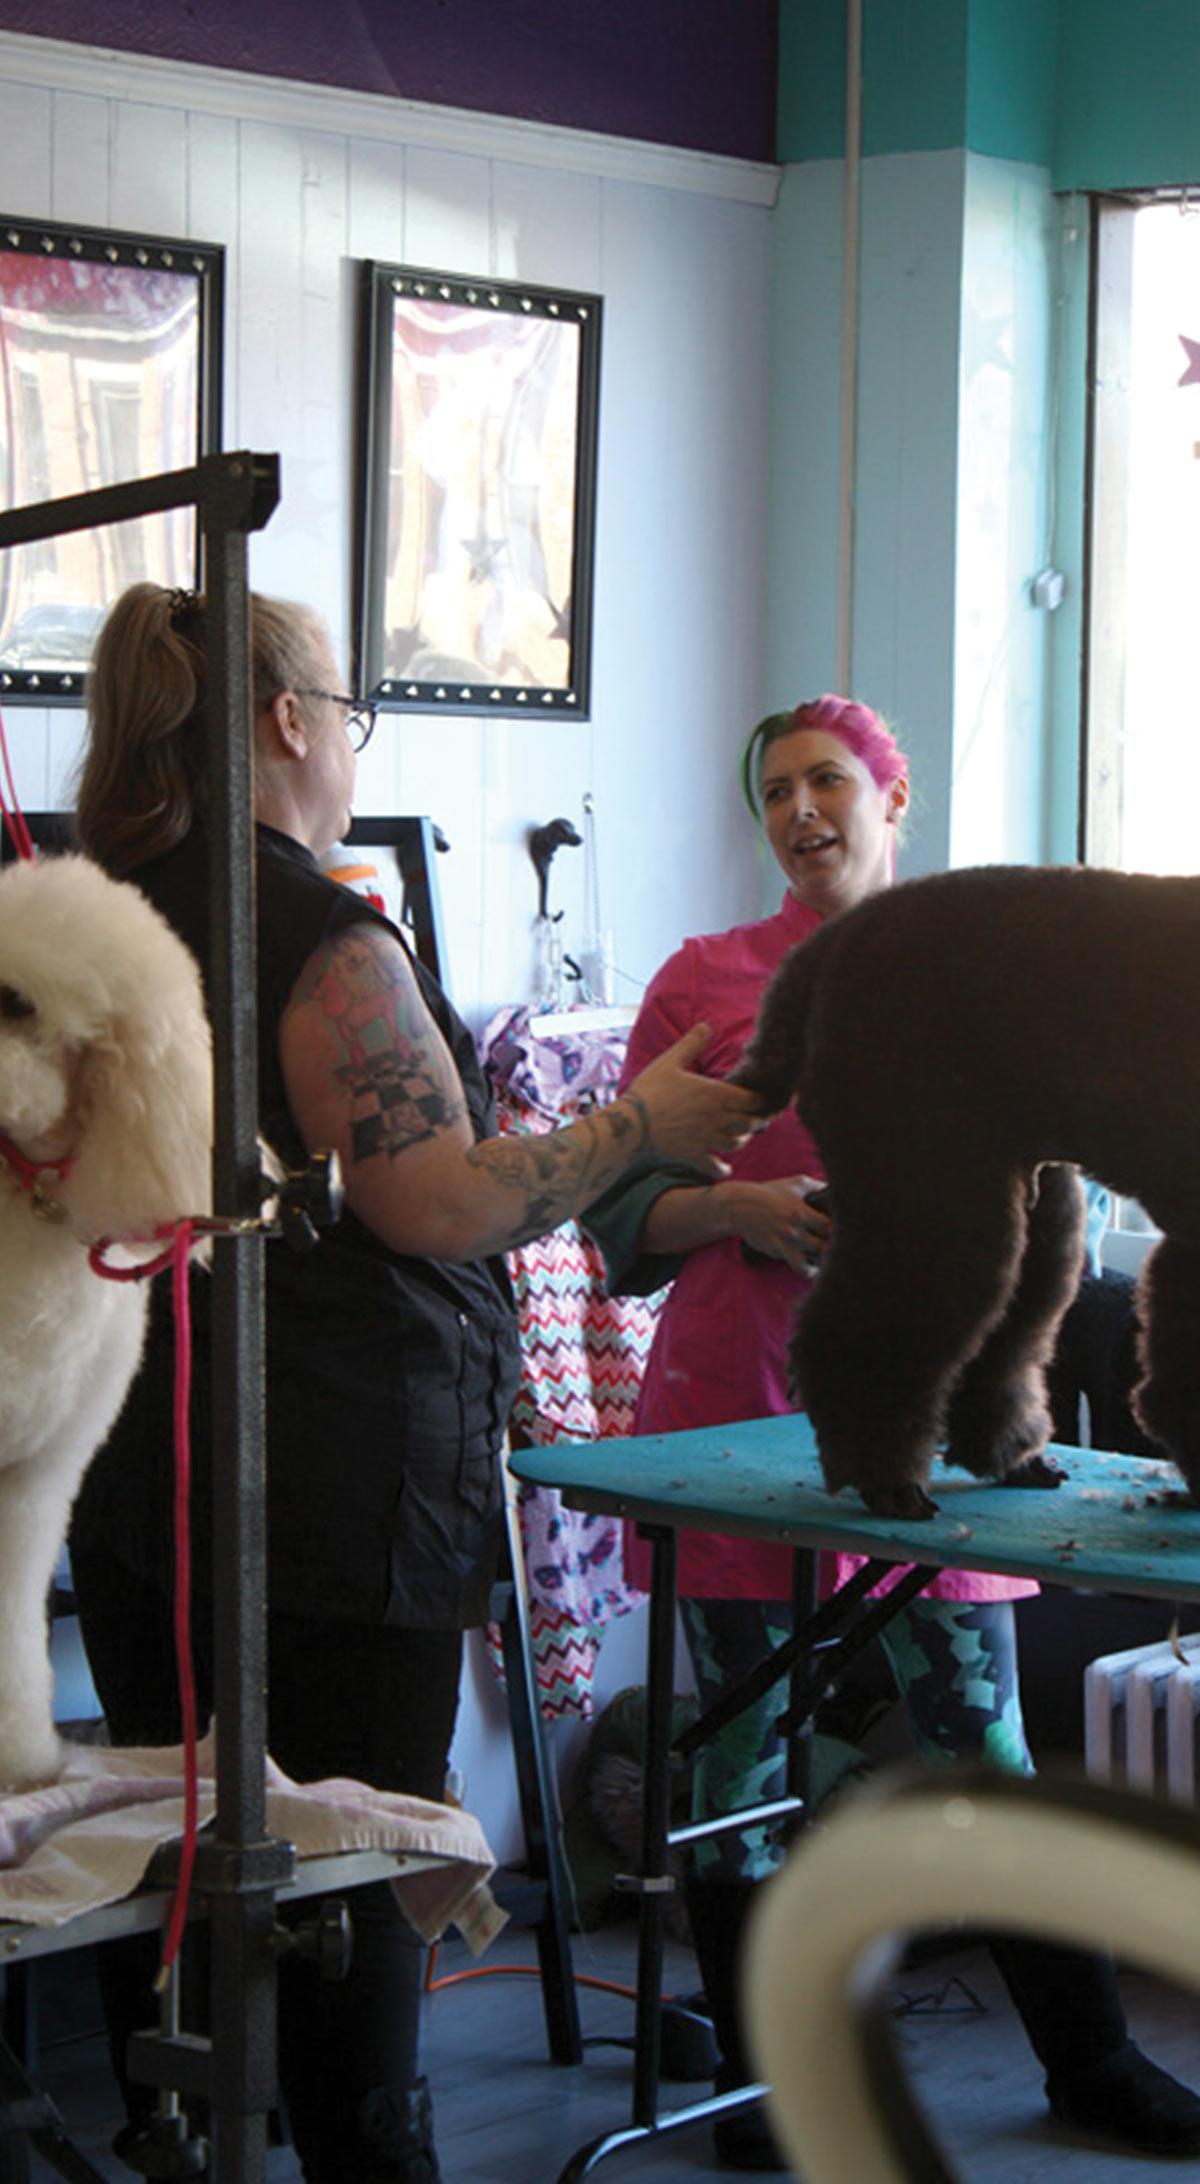 pet groomers in a salon